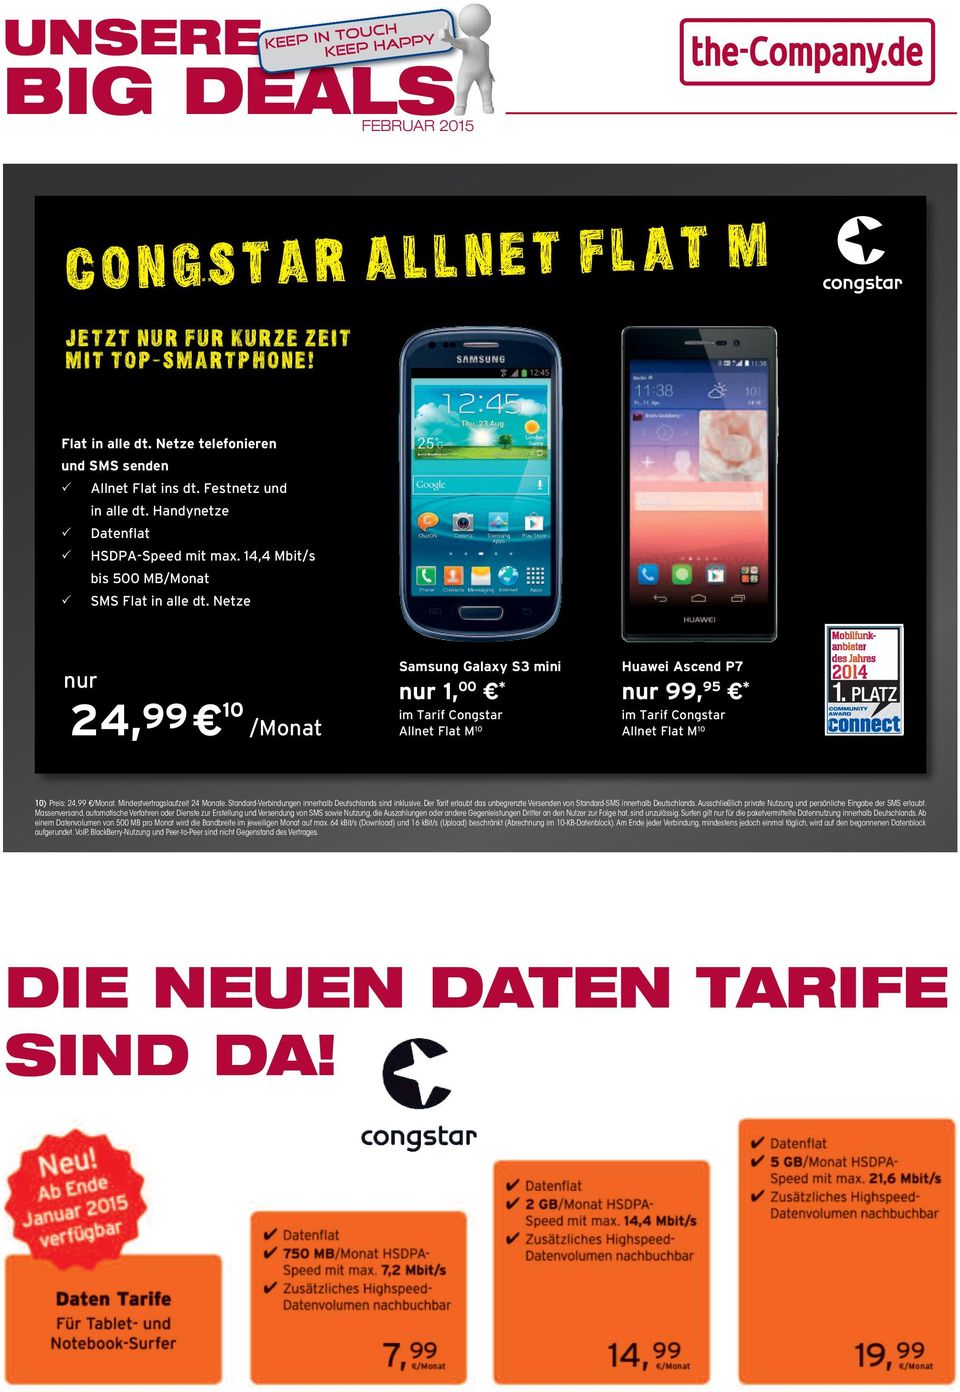 Netze nur 24,99 10 /Monat Samsung Galaxy S3 mini nur 1, 00 * im Tarif Congstar Allnet Flat M 10 Huawei Ascend P7 nur 99, 95 * im Tarif Congstar Allnet Flat M 10 10) Preis: 24,99 /Monat.